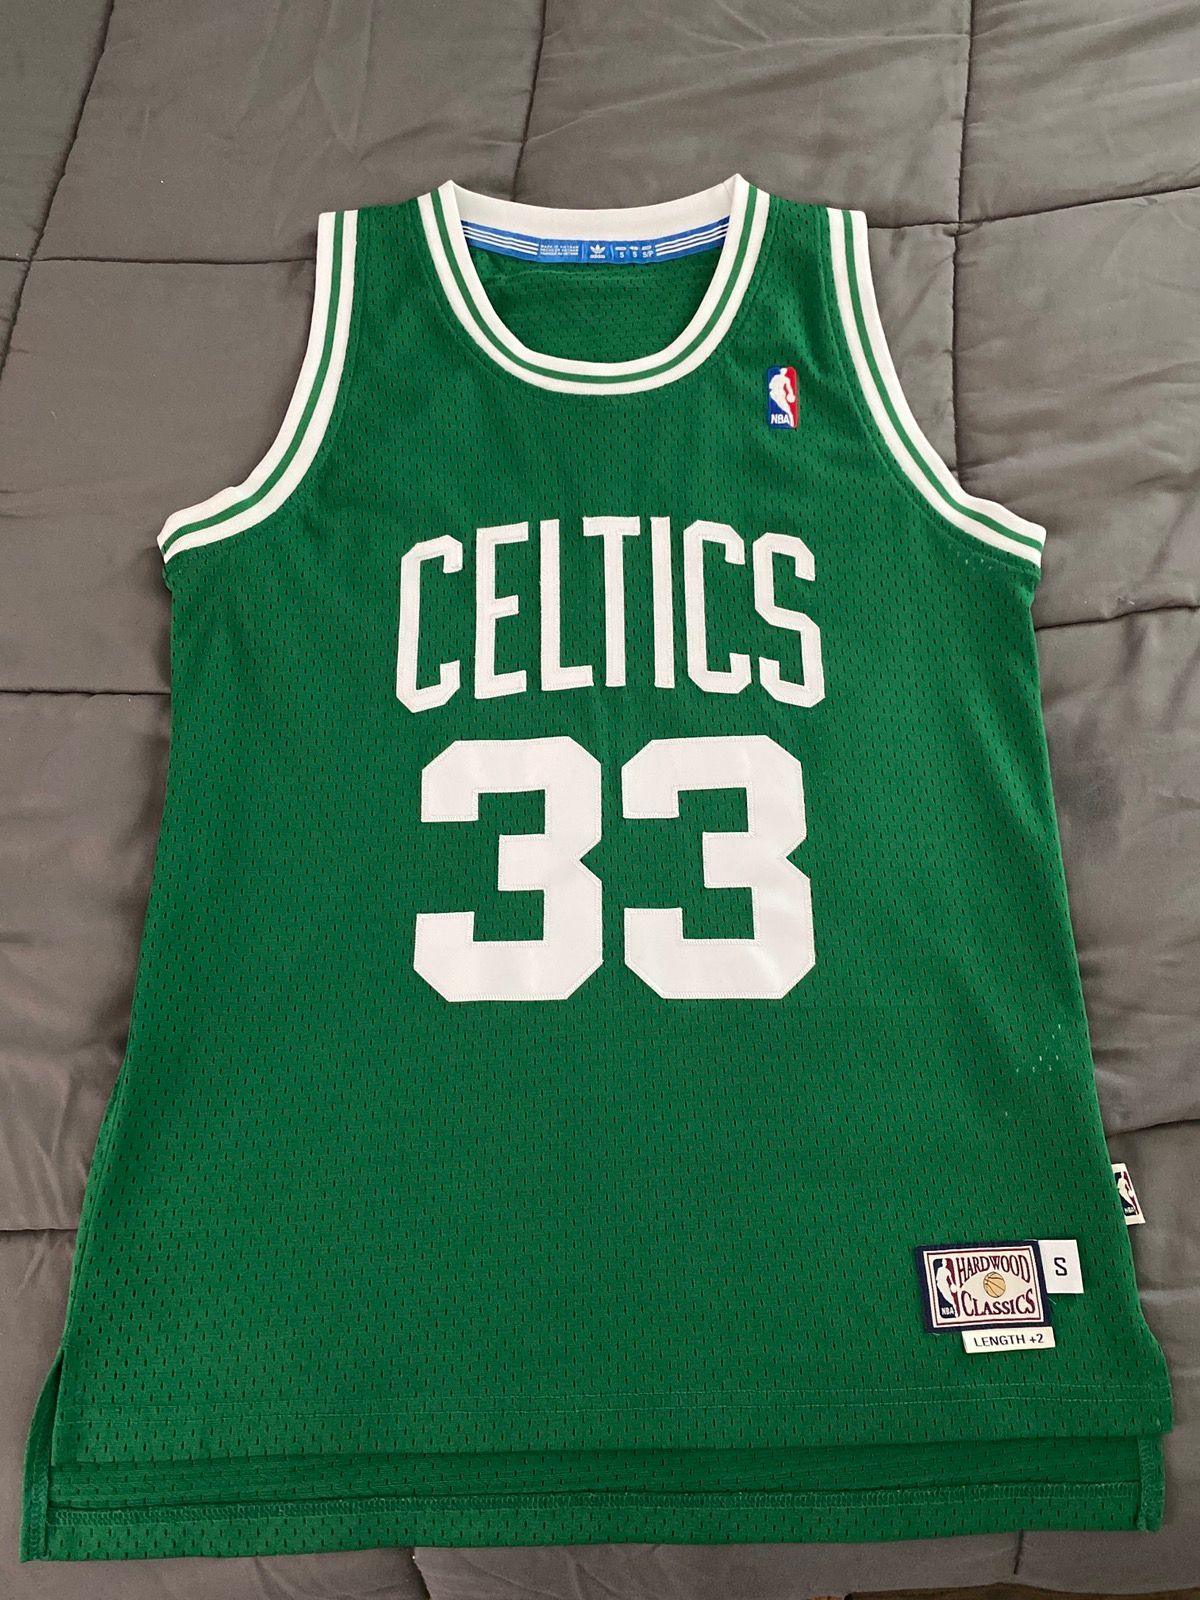 Adidas Hardwood Classics Larry Bird Celtics Jersey Size US S / EU 44-46 / 1 - 1 Preview